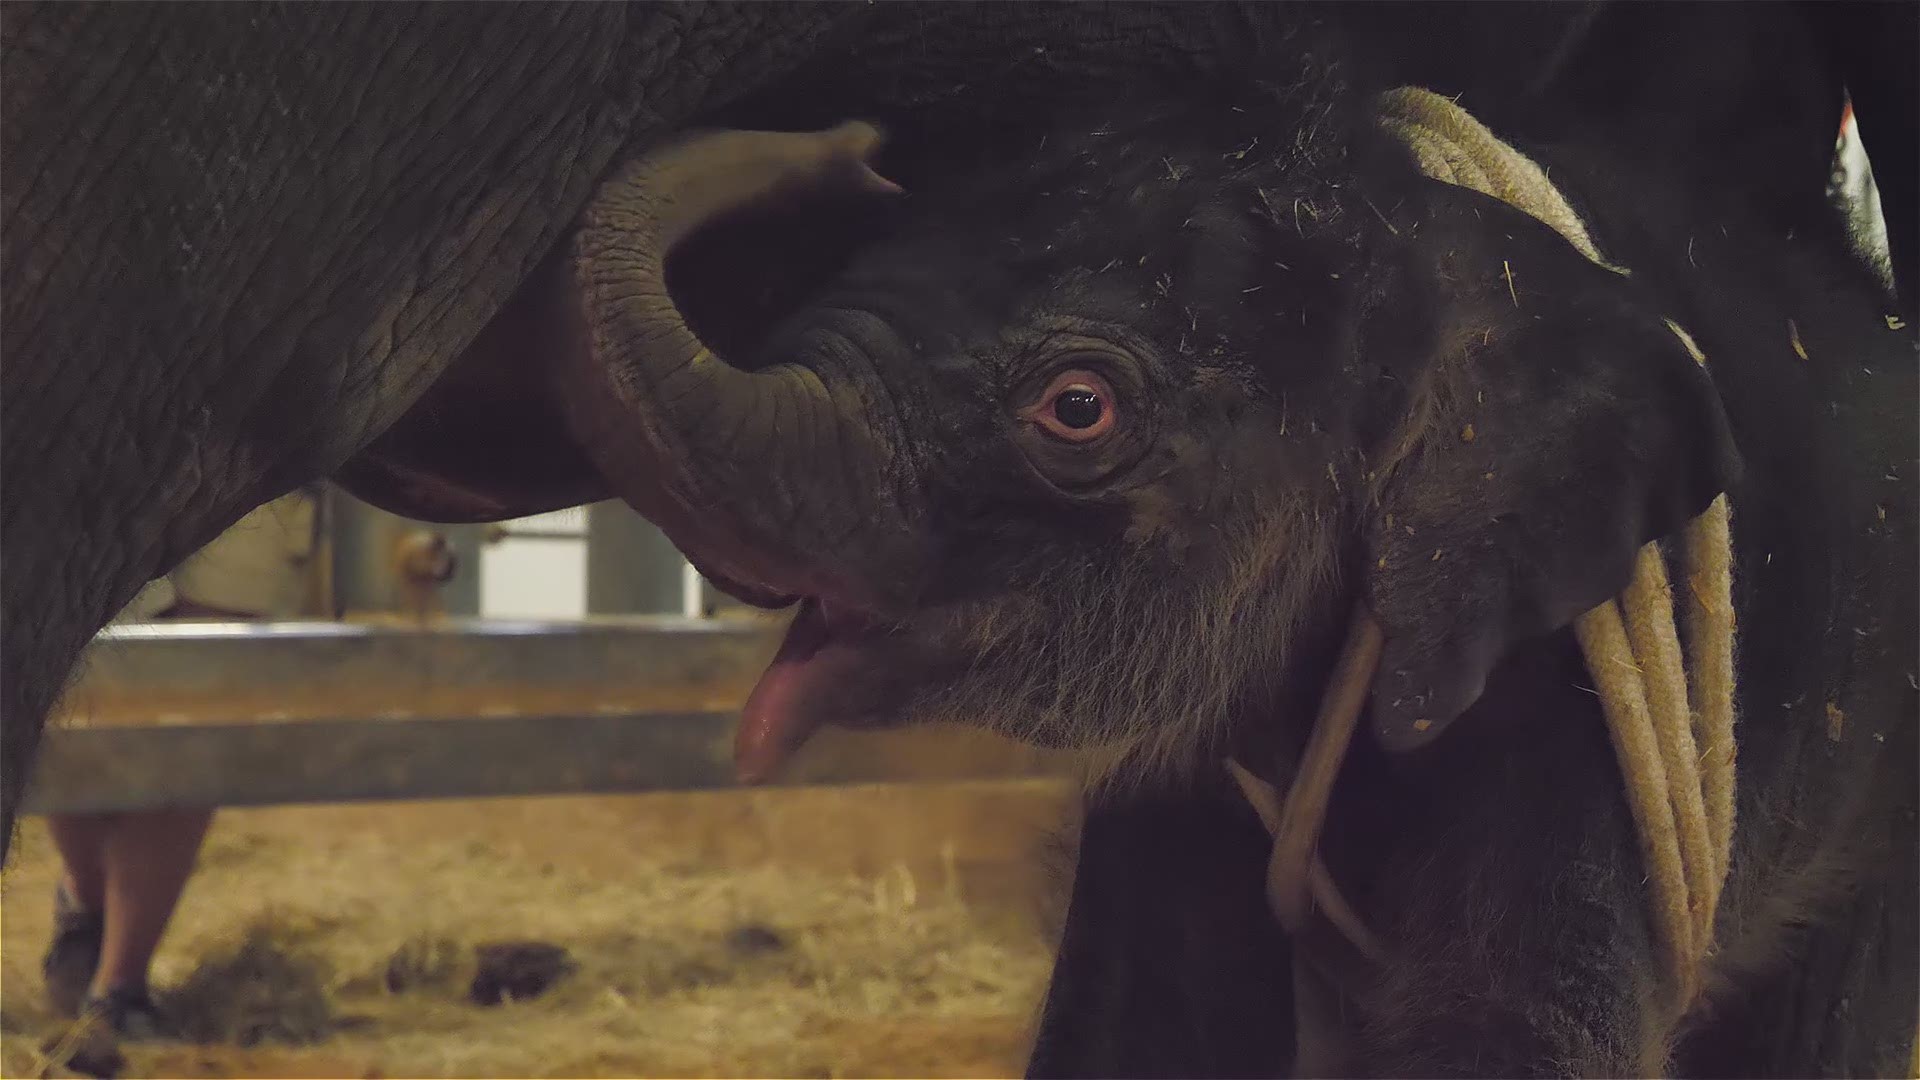 A female baby elephant, Joy, has been born at the Houston Zoo. Video: Jeremy Stewart/Houston Zoo